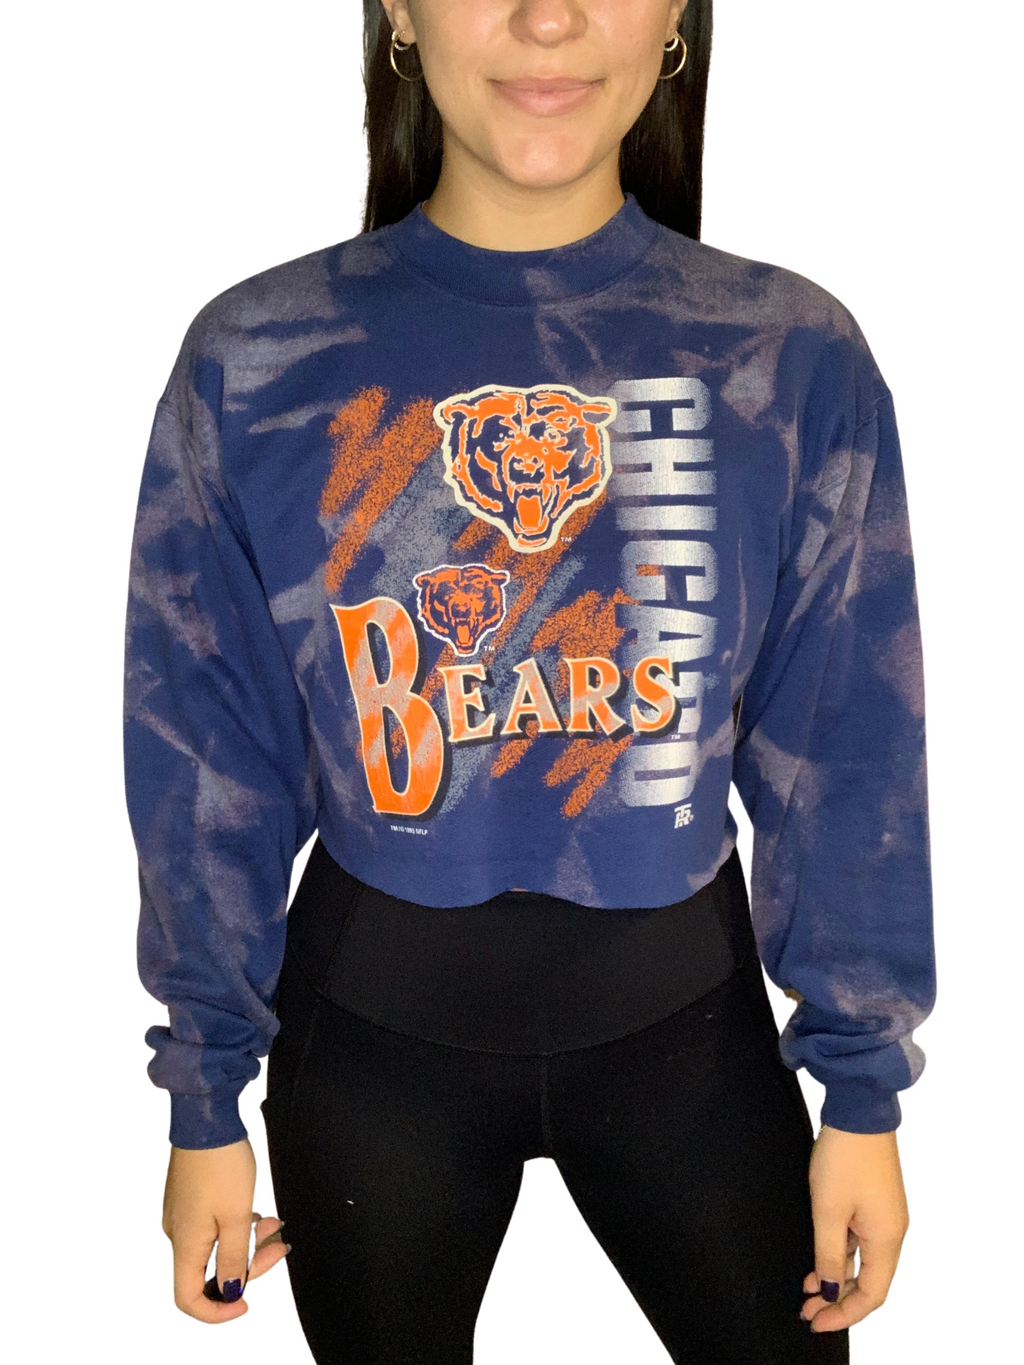 Vintage Chicago Bears Cropped & Bleached Sweatshirt